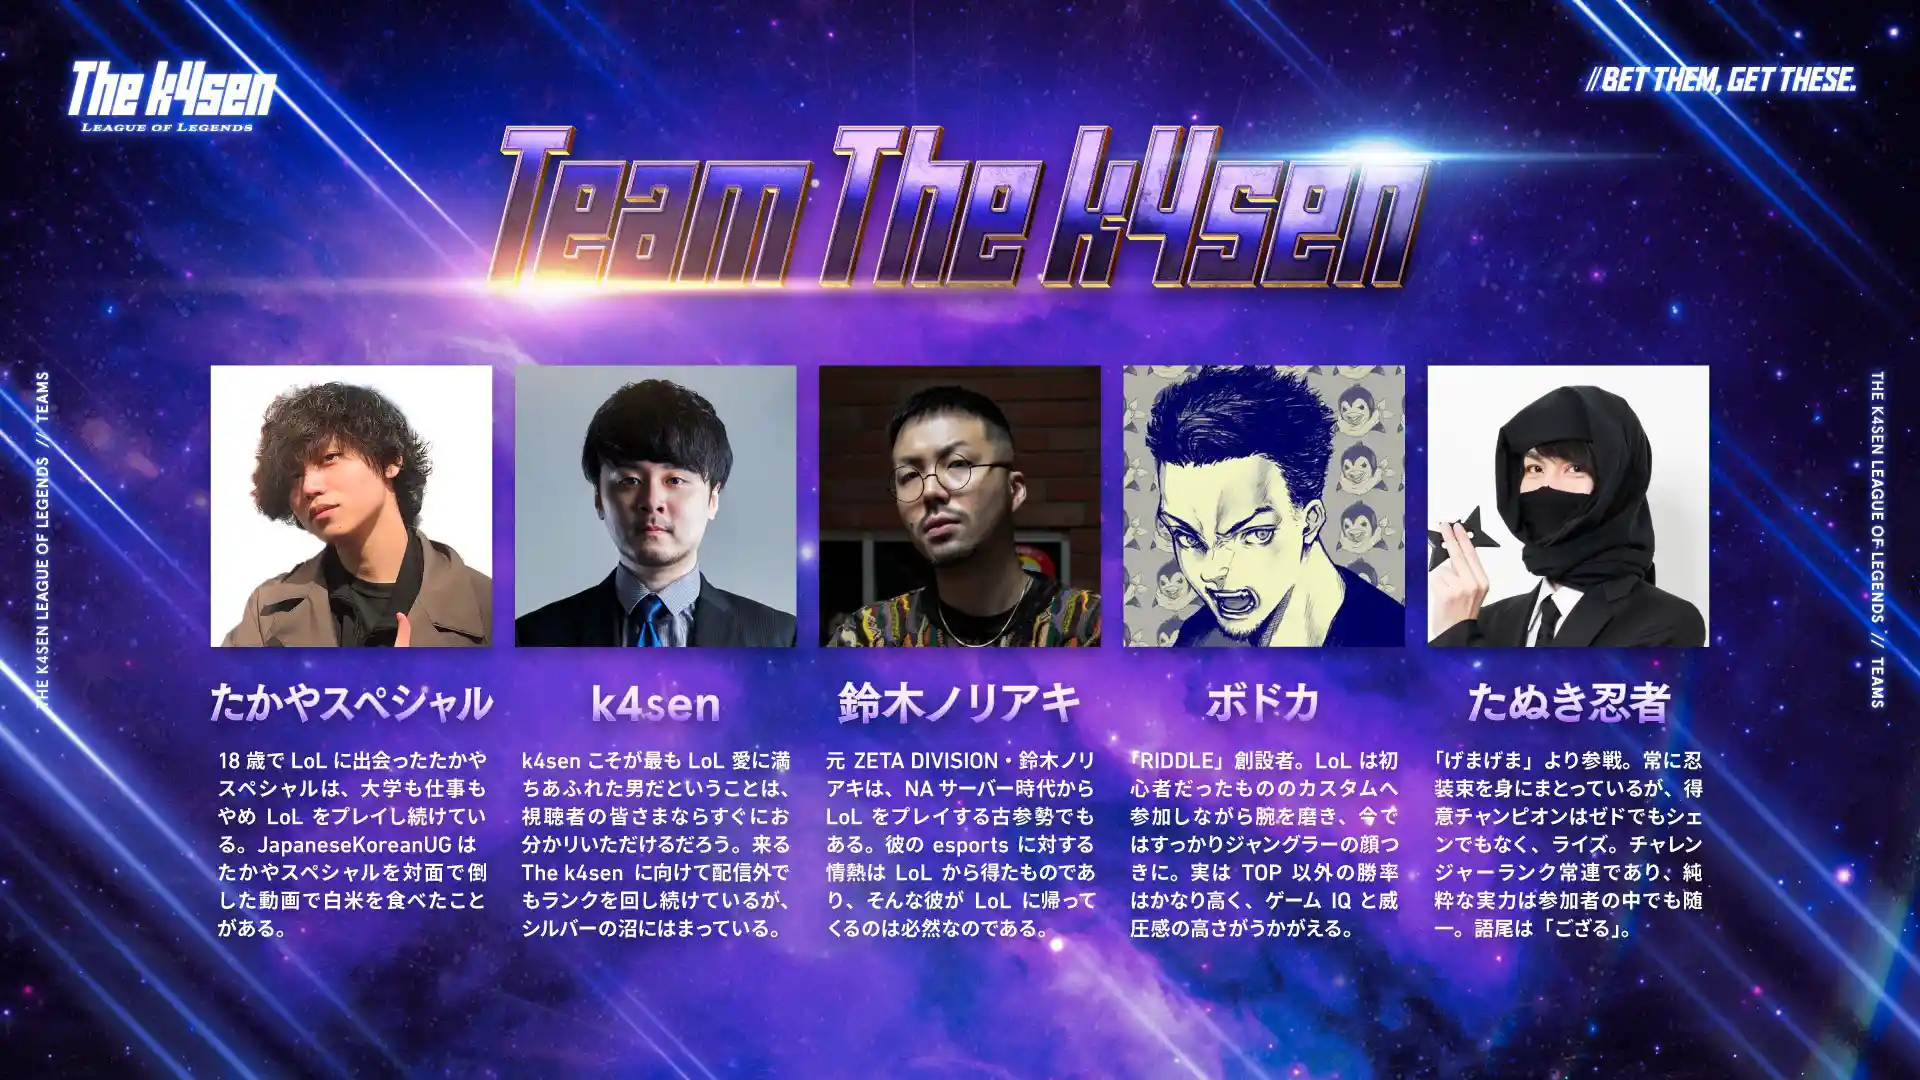 Team The k4sen